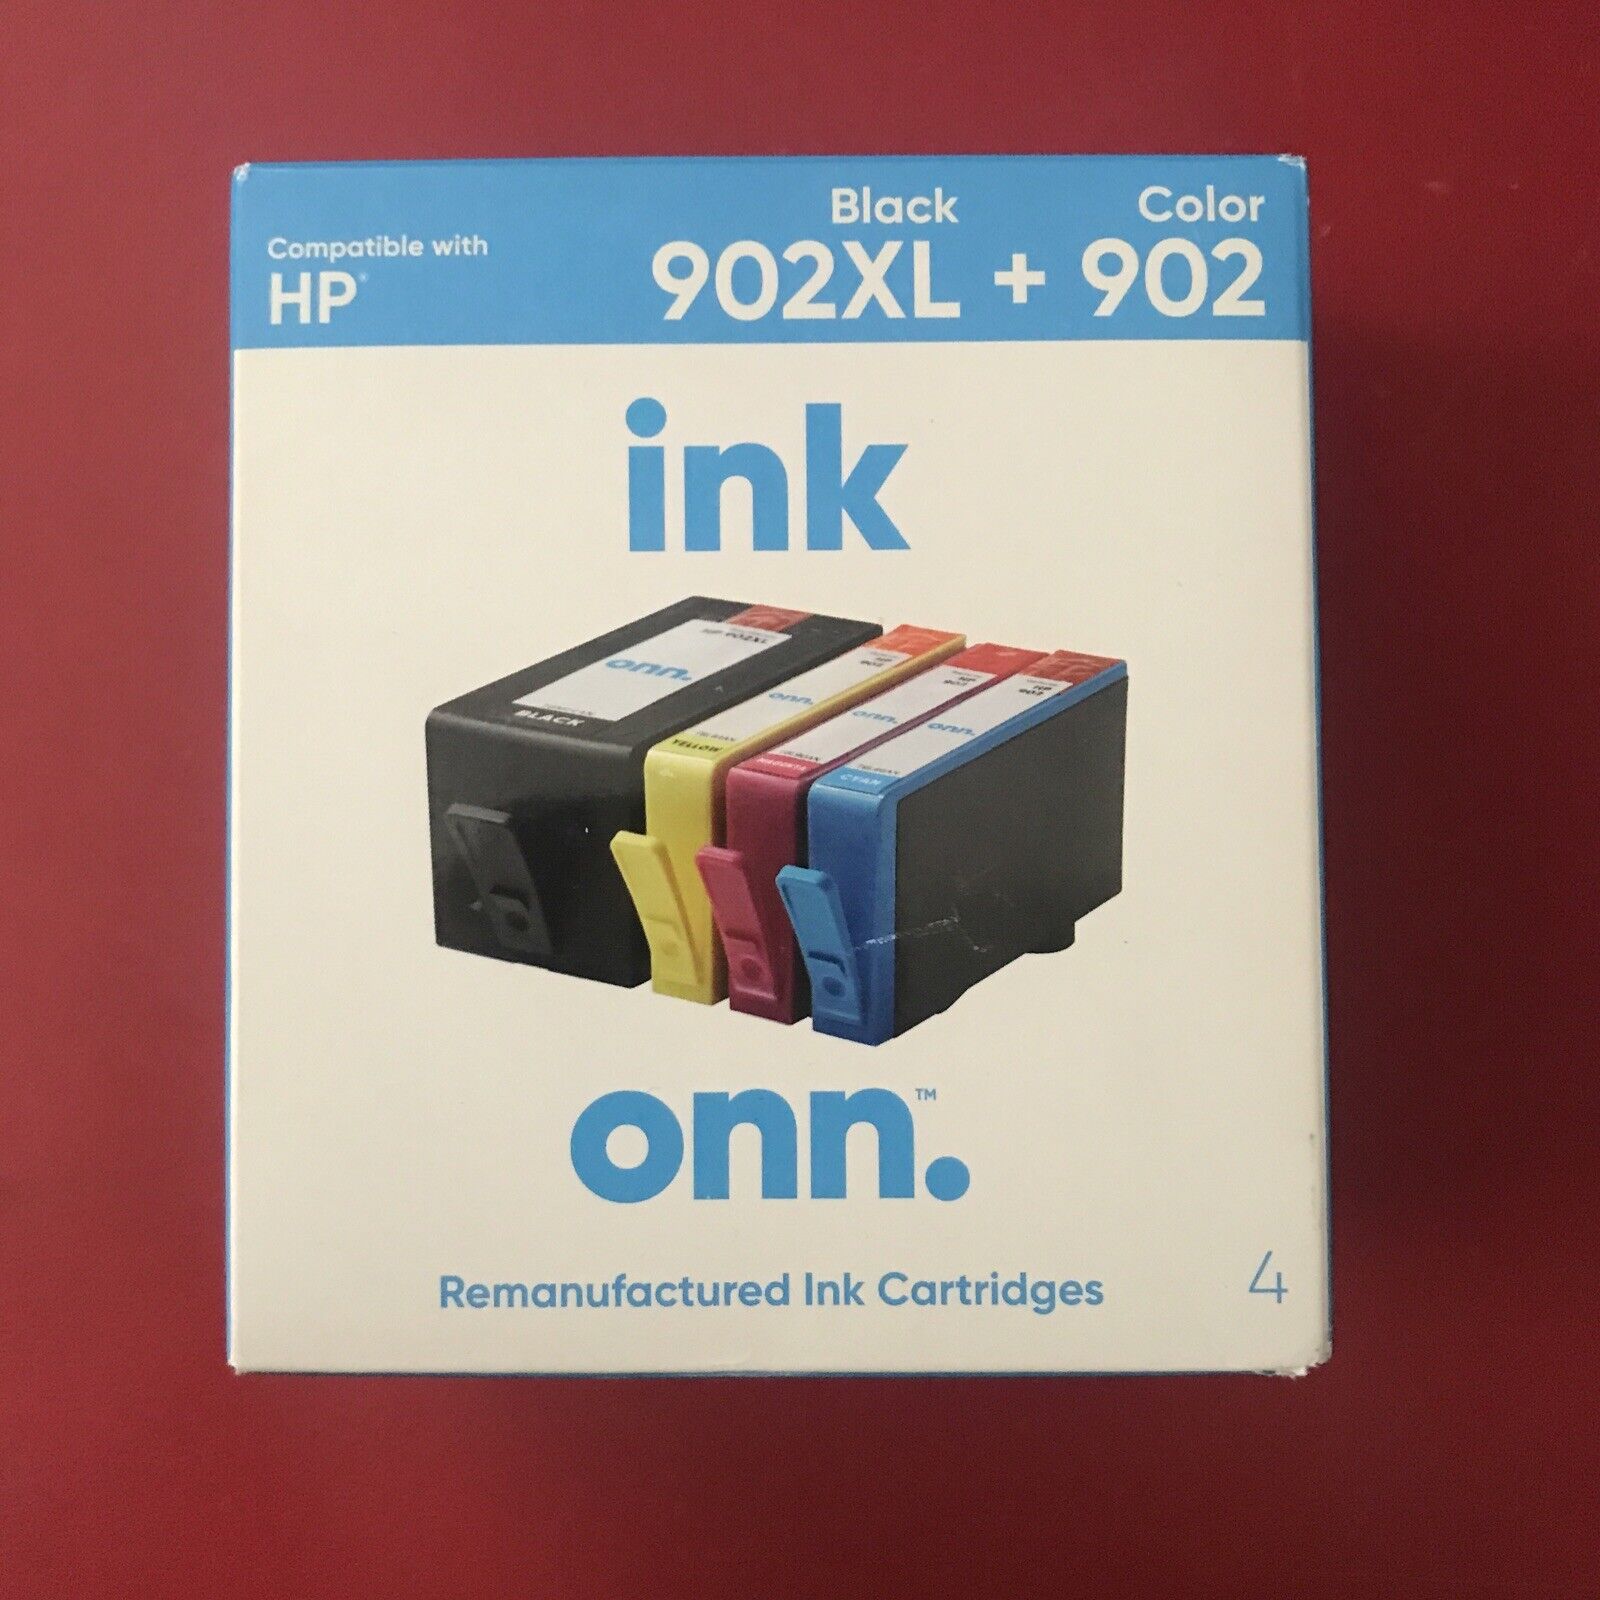 NEW - ONN Black 902XL + Color 902 Printer Ink Cartridge EXP: 02/2023